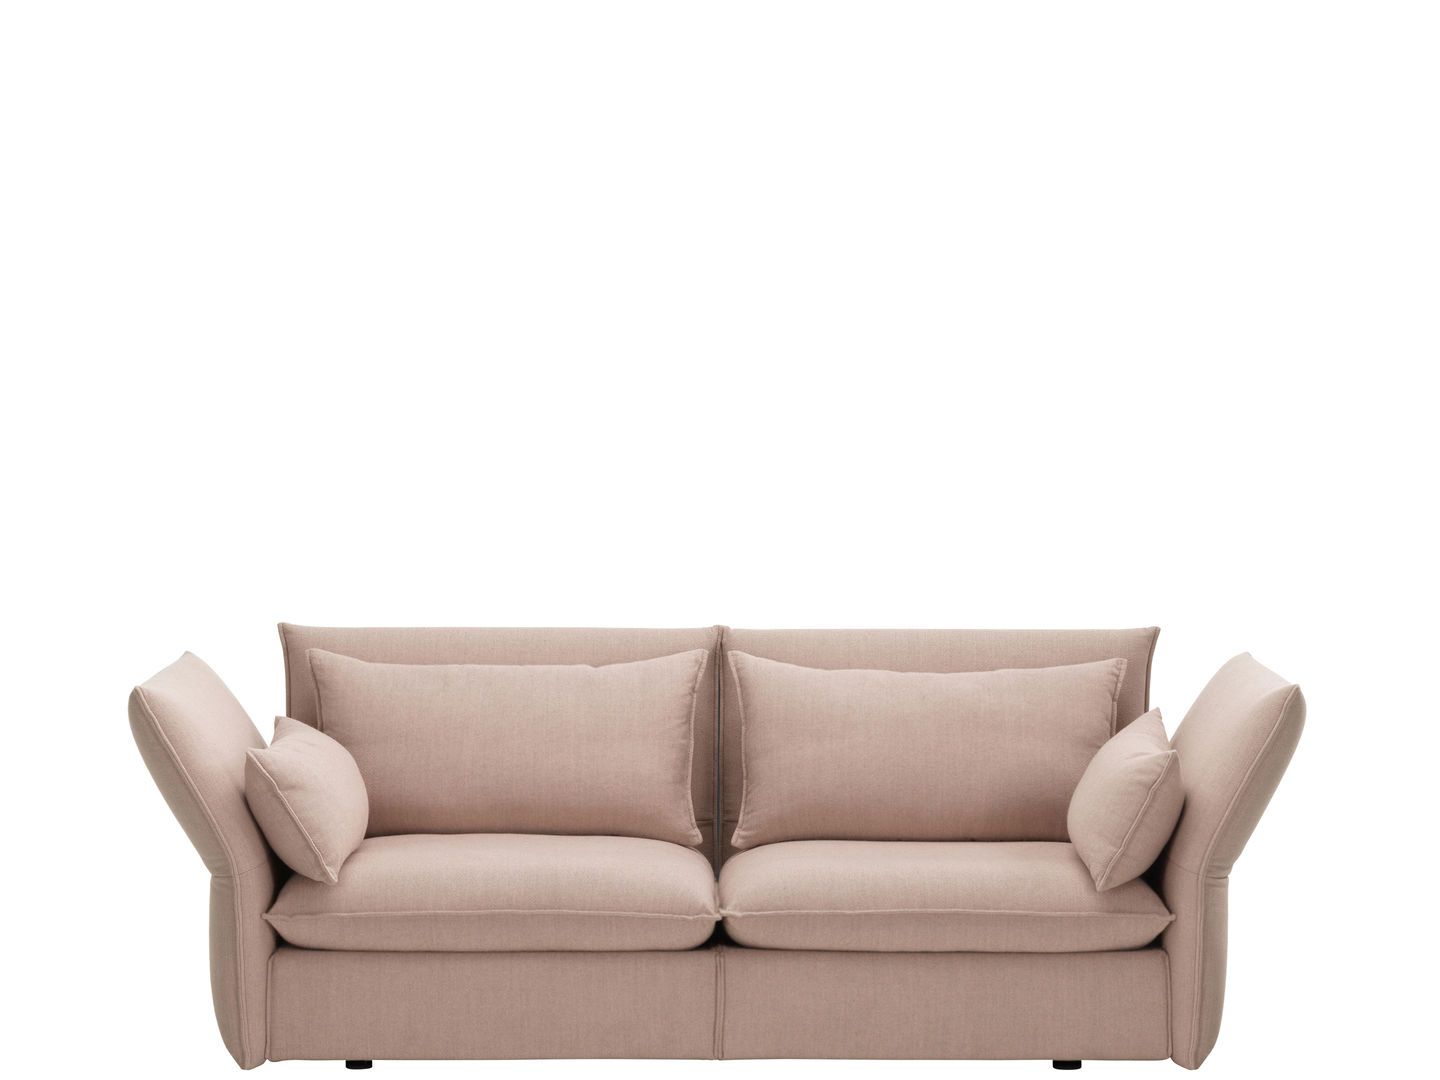 /2-Seater Vitra Mariposa Sofa in a modern living room setting.